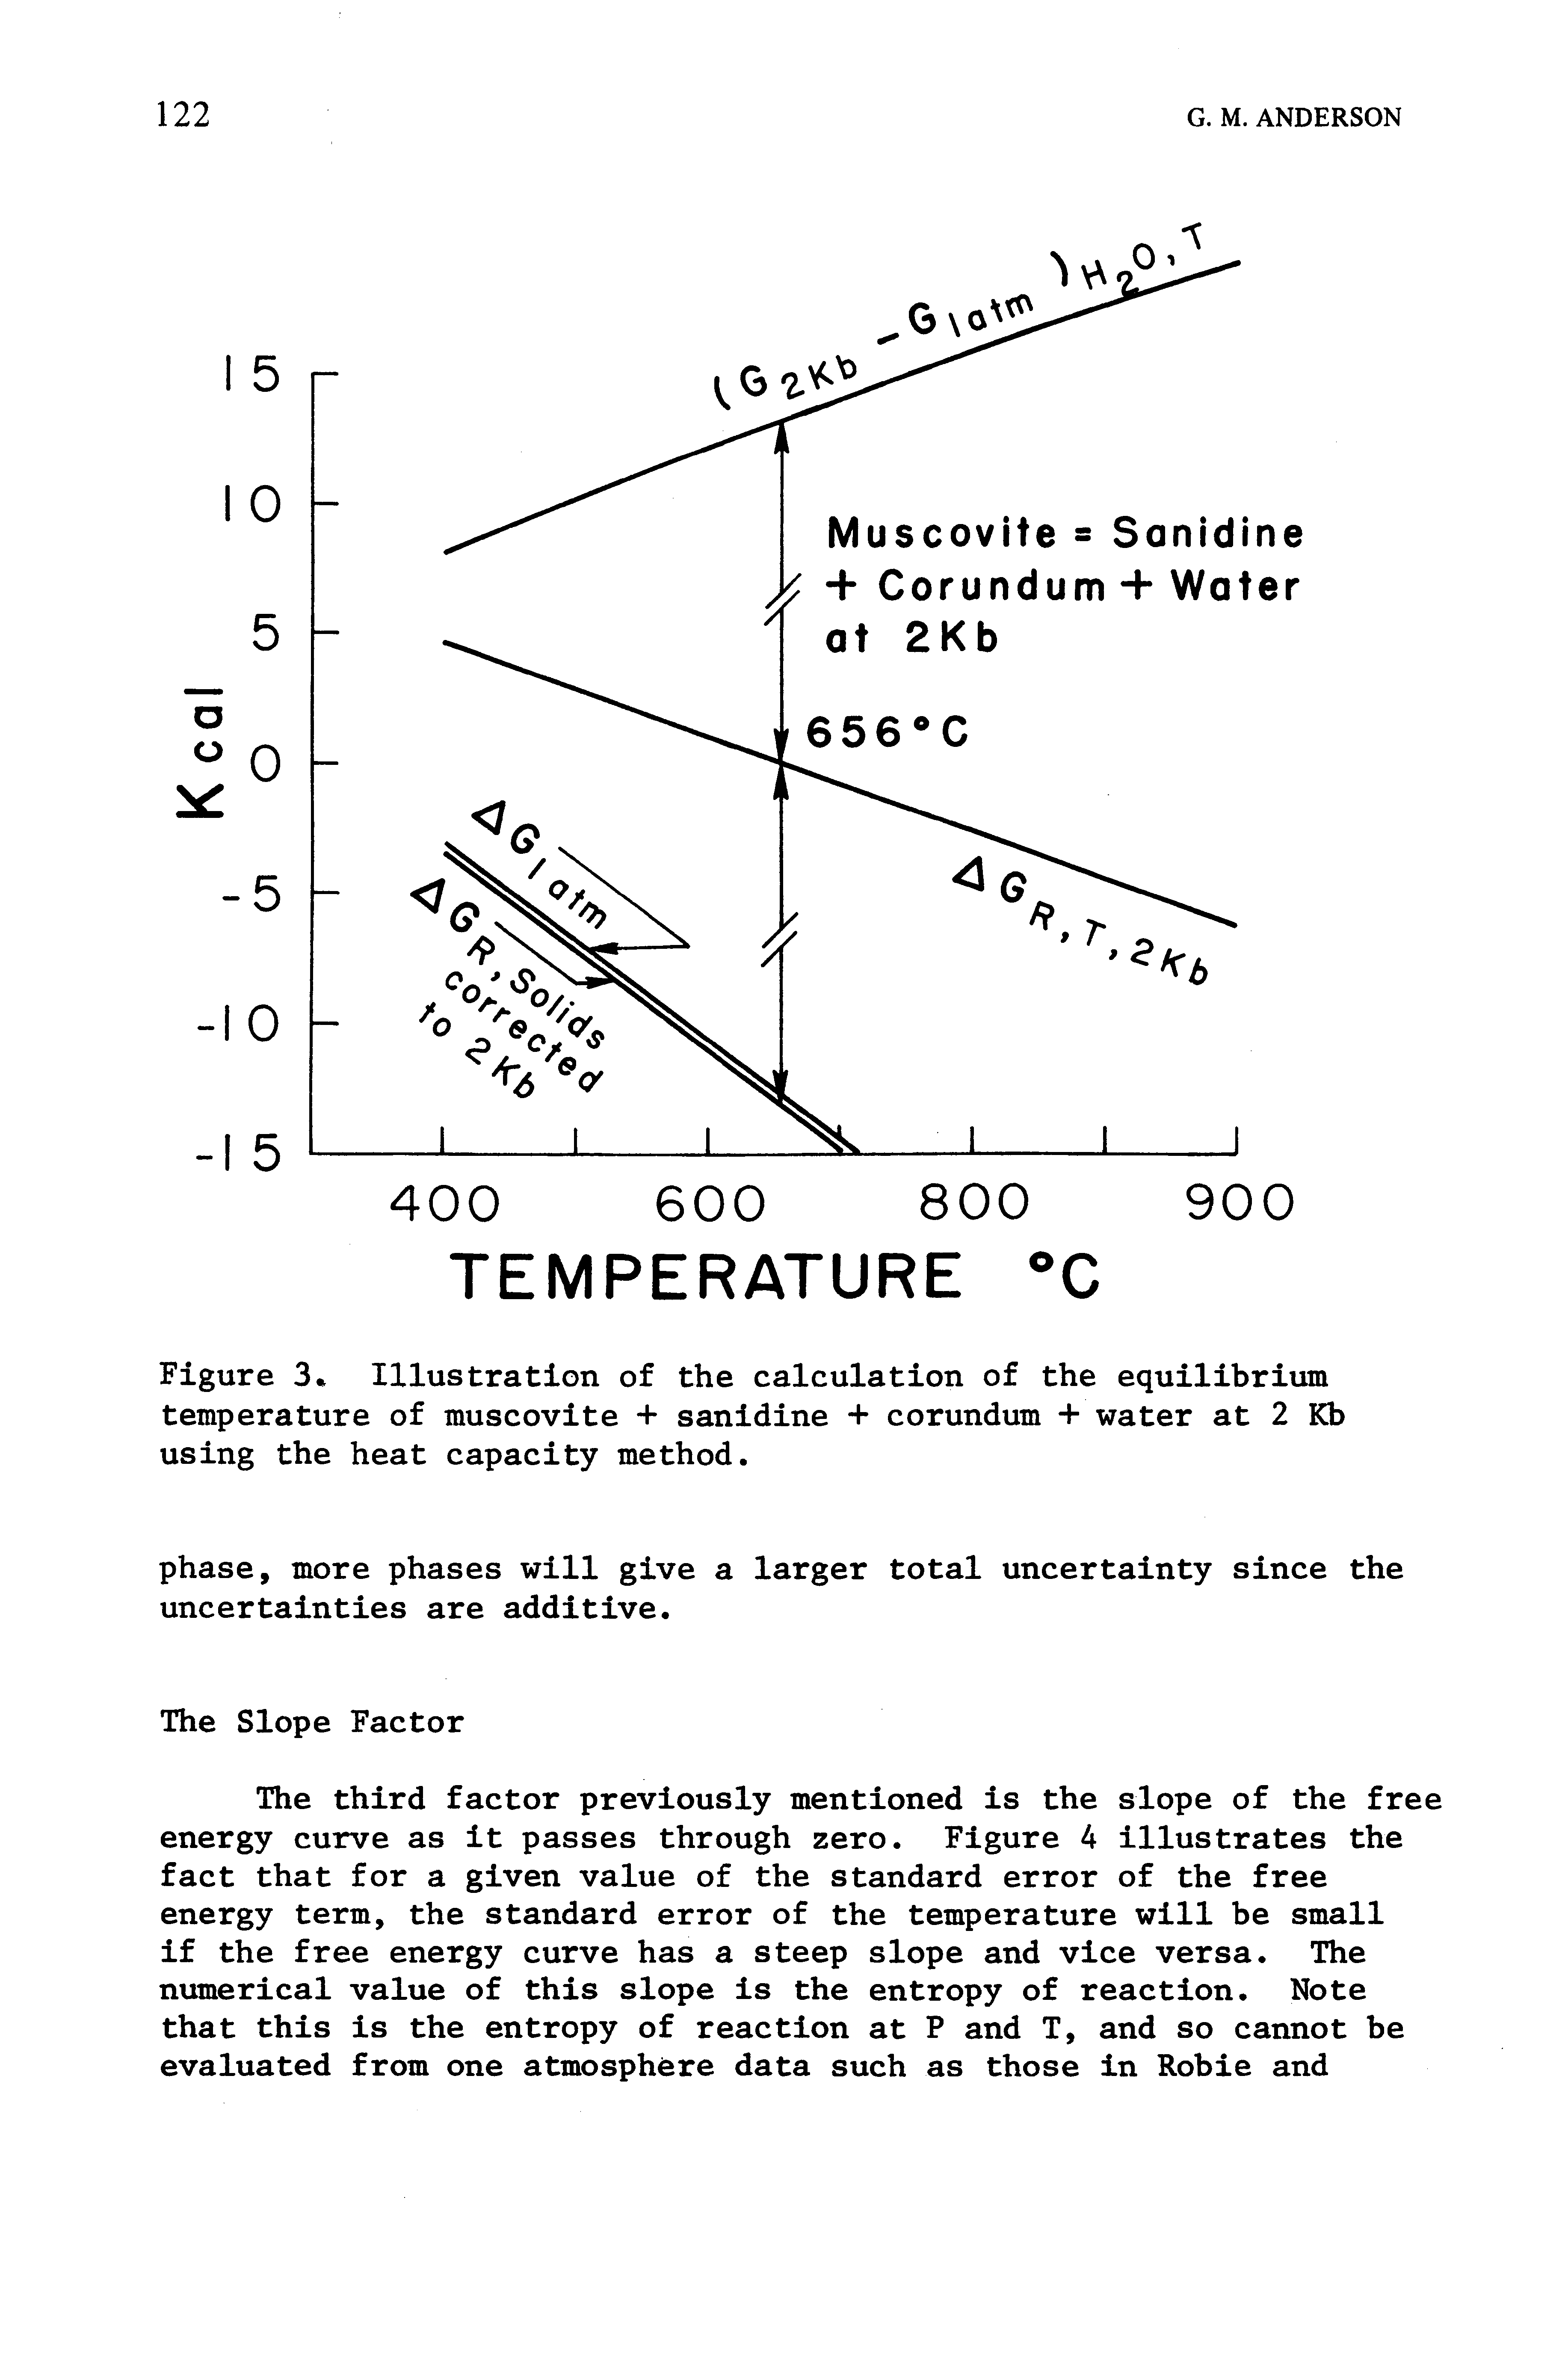 Figure 3 Illustration of the calculation of the equilibrium temperature of muscovite + sanidine + corundum + water at 2 Kb using the heat capacity method.